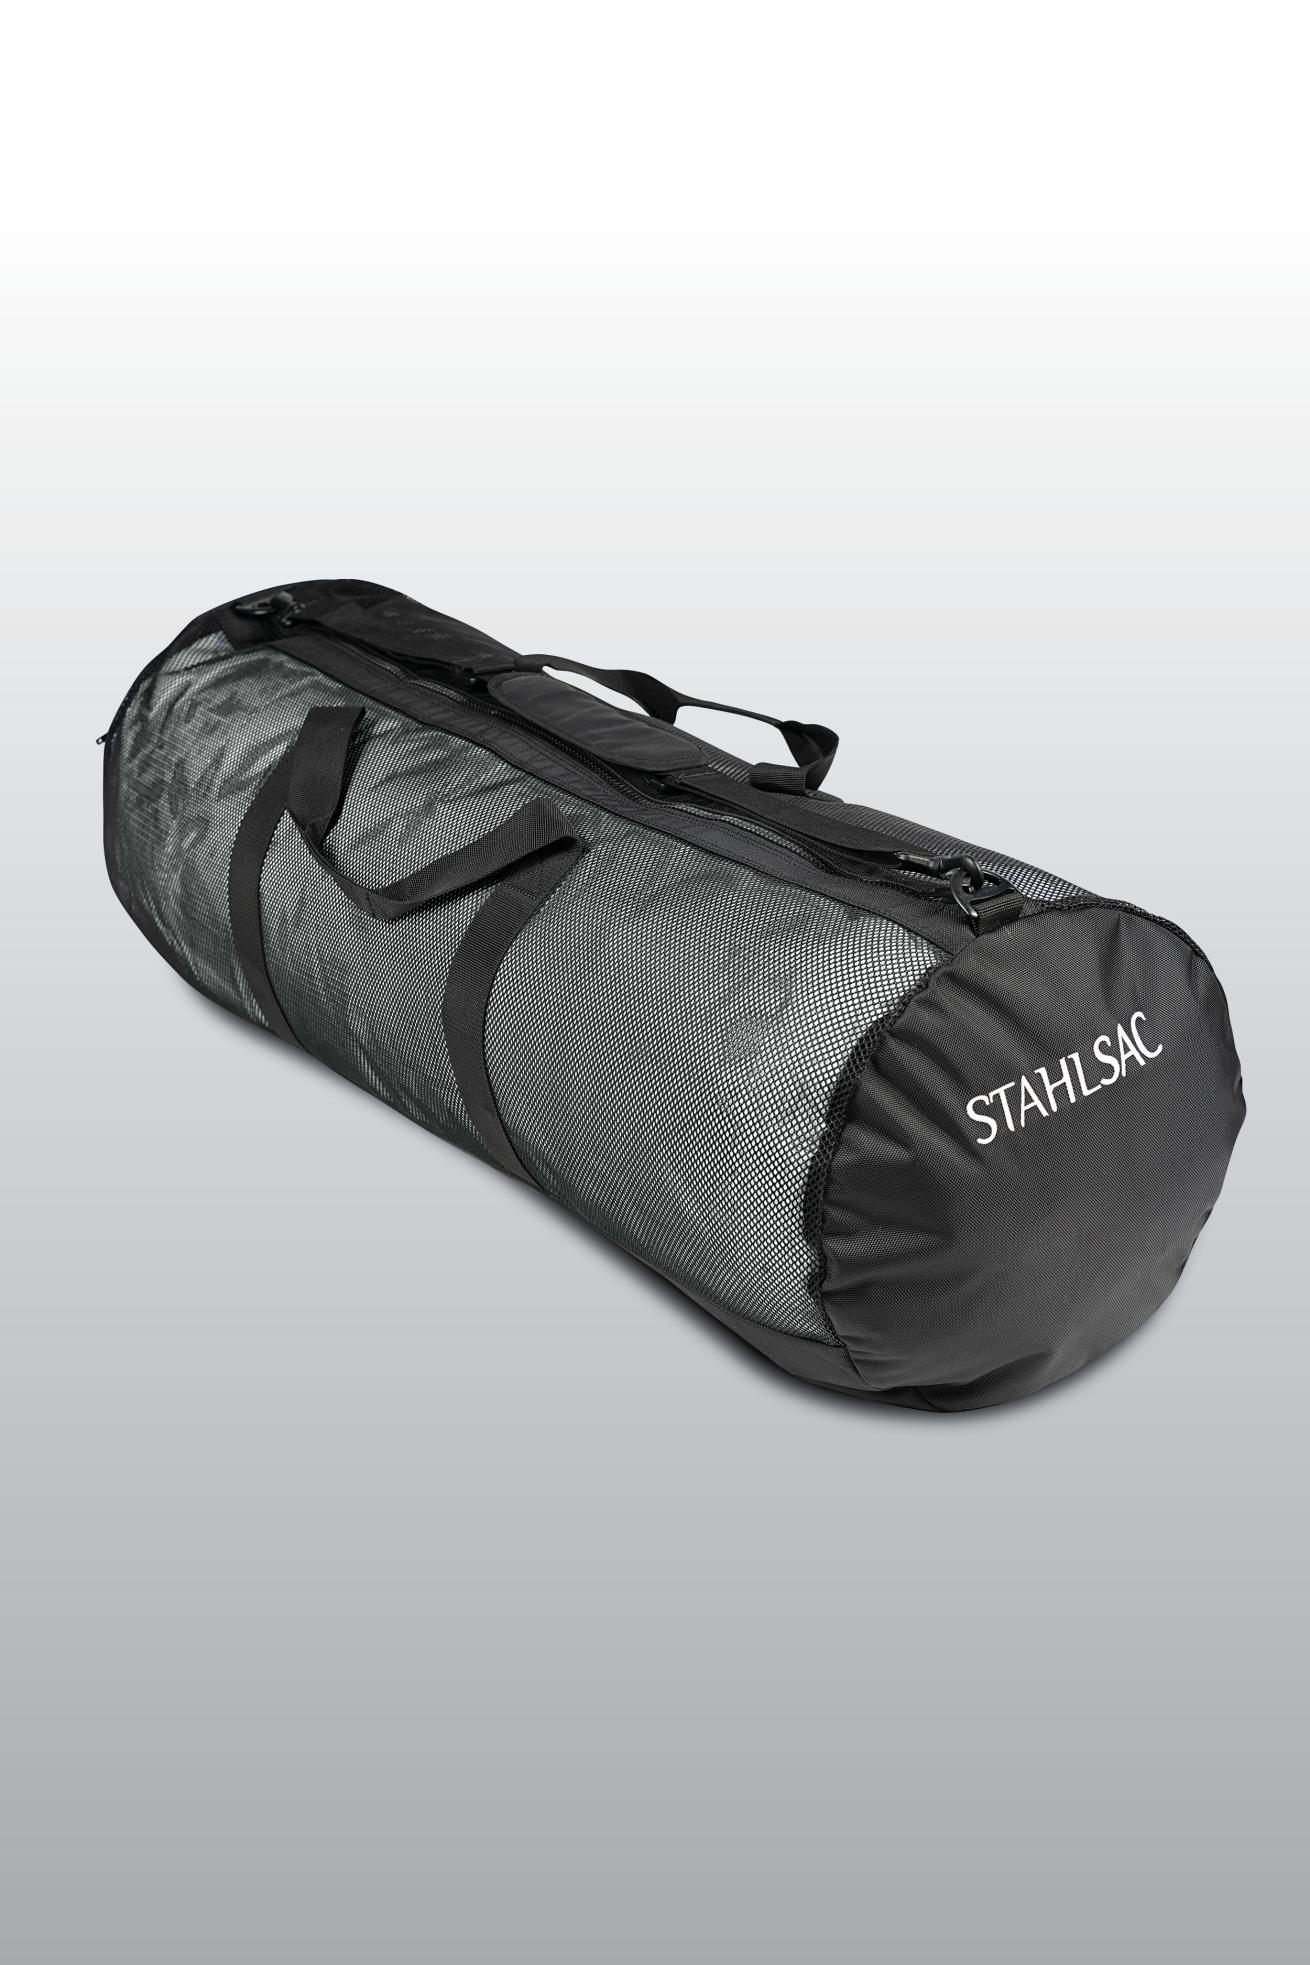 Stahlsac 40-inch Mesh Bag